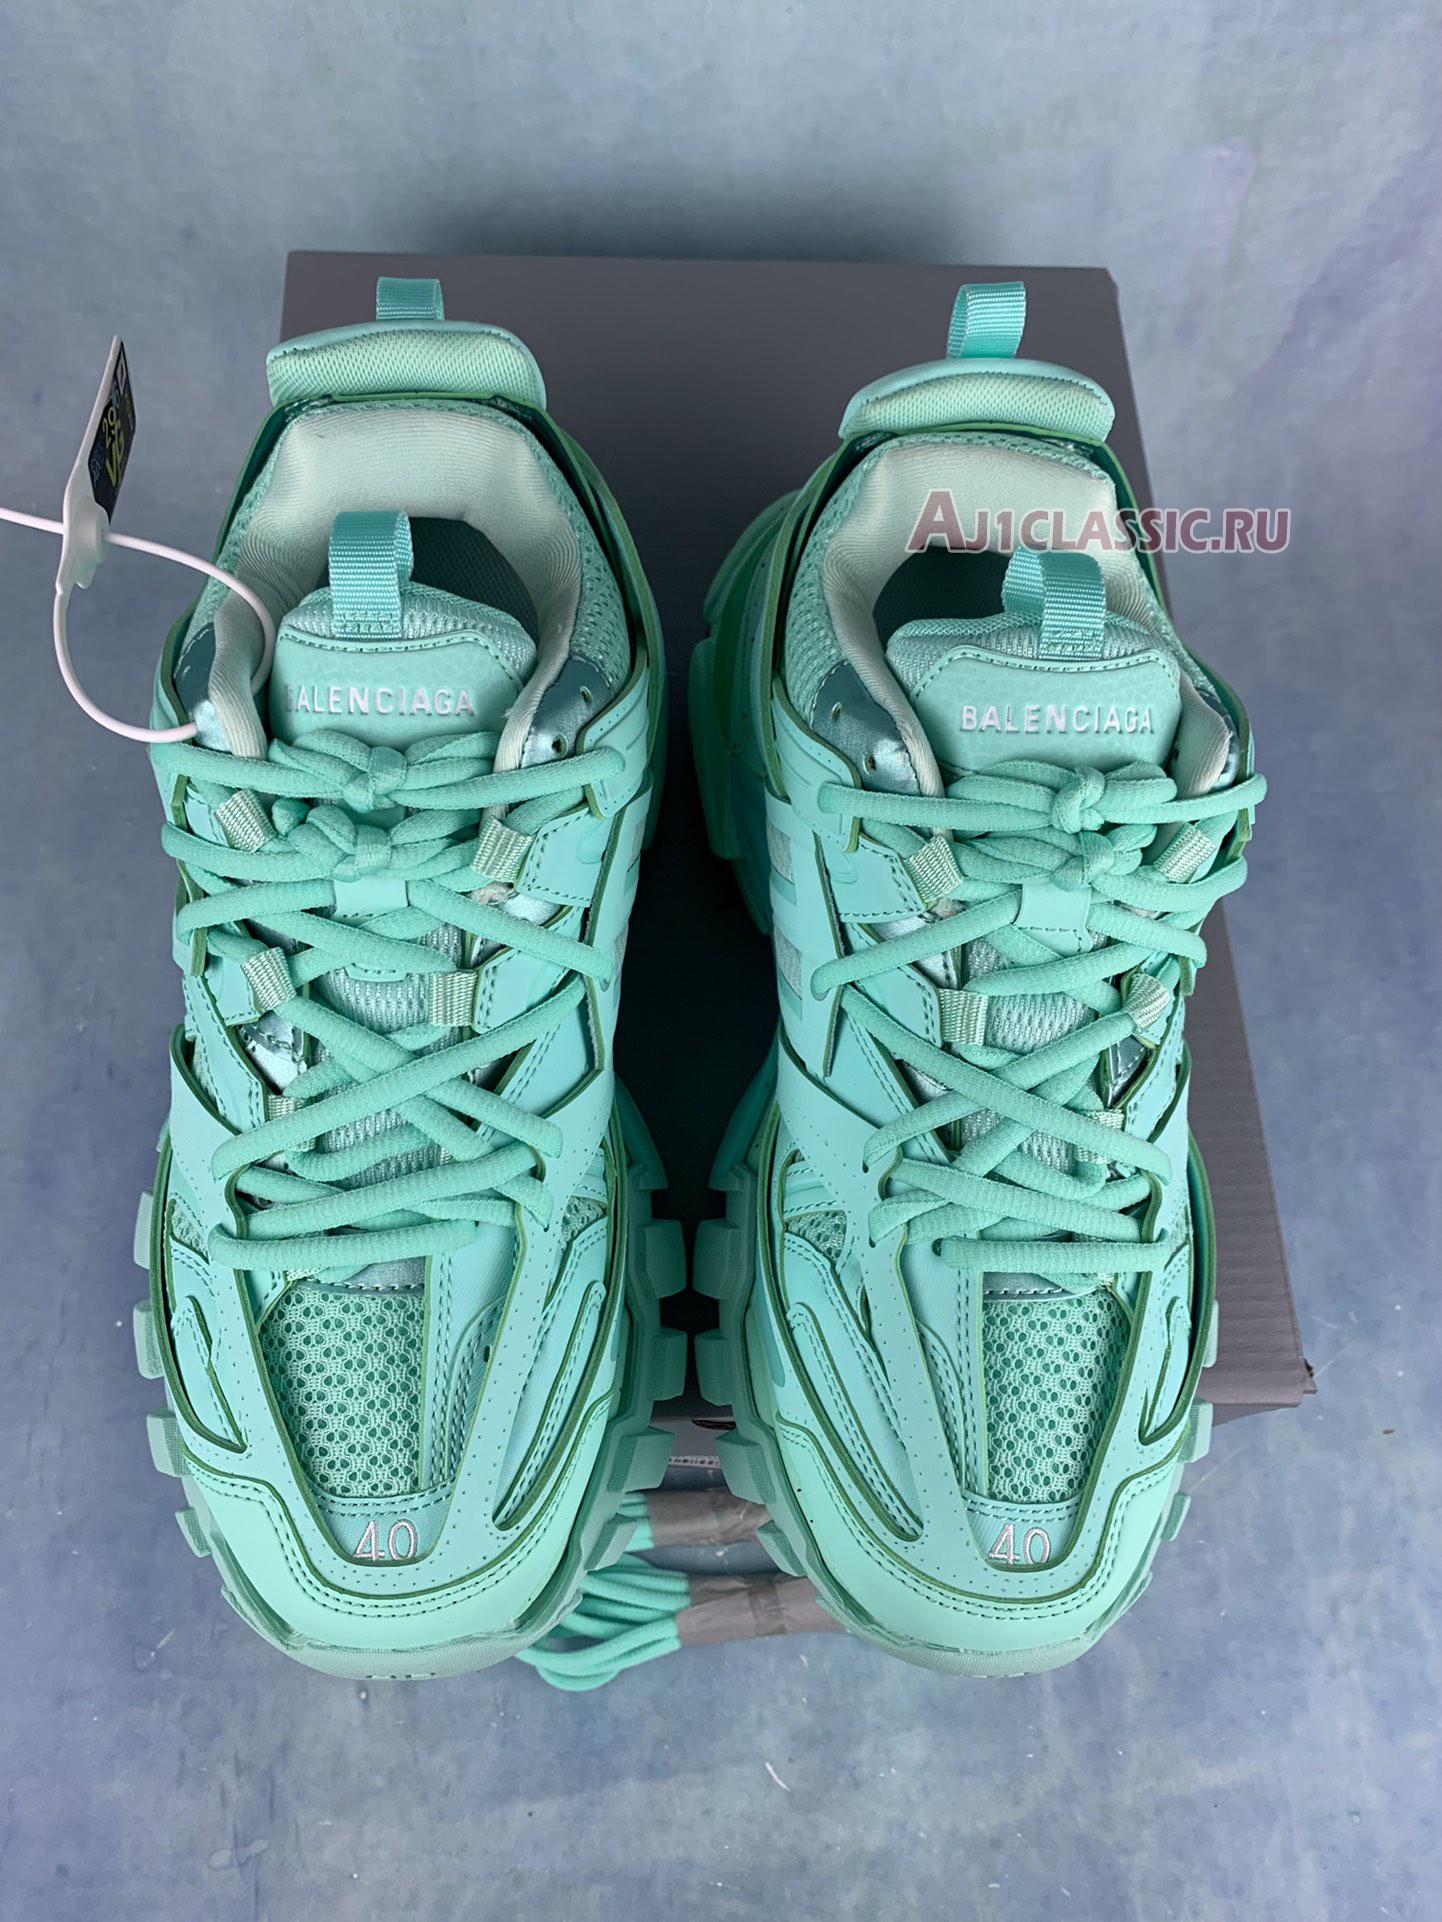 Balenciaga Track Sneaker "Mint" 542436 W3FE3 3000